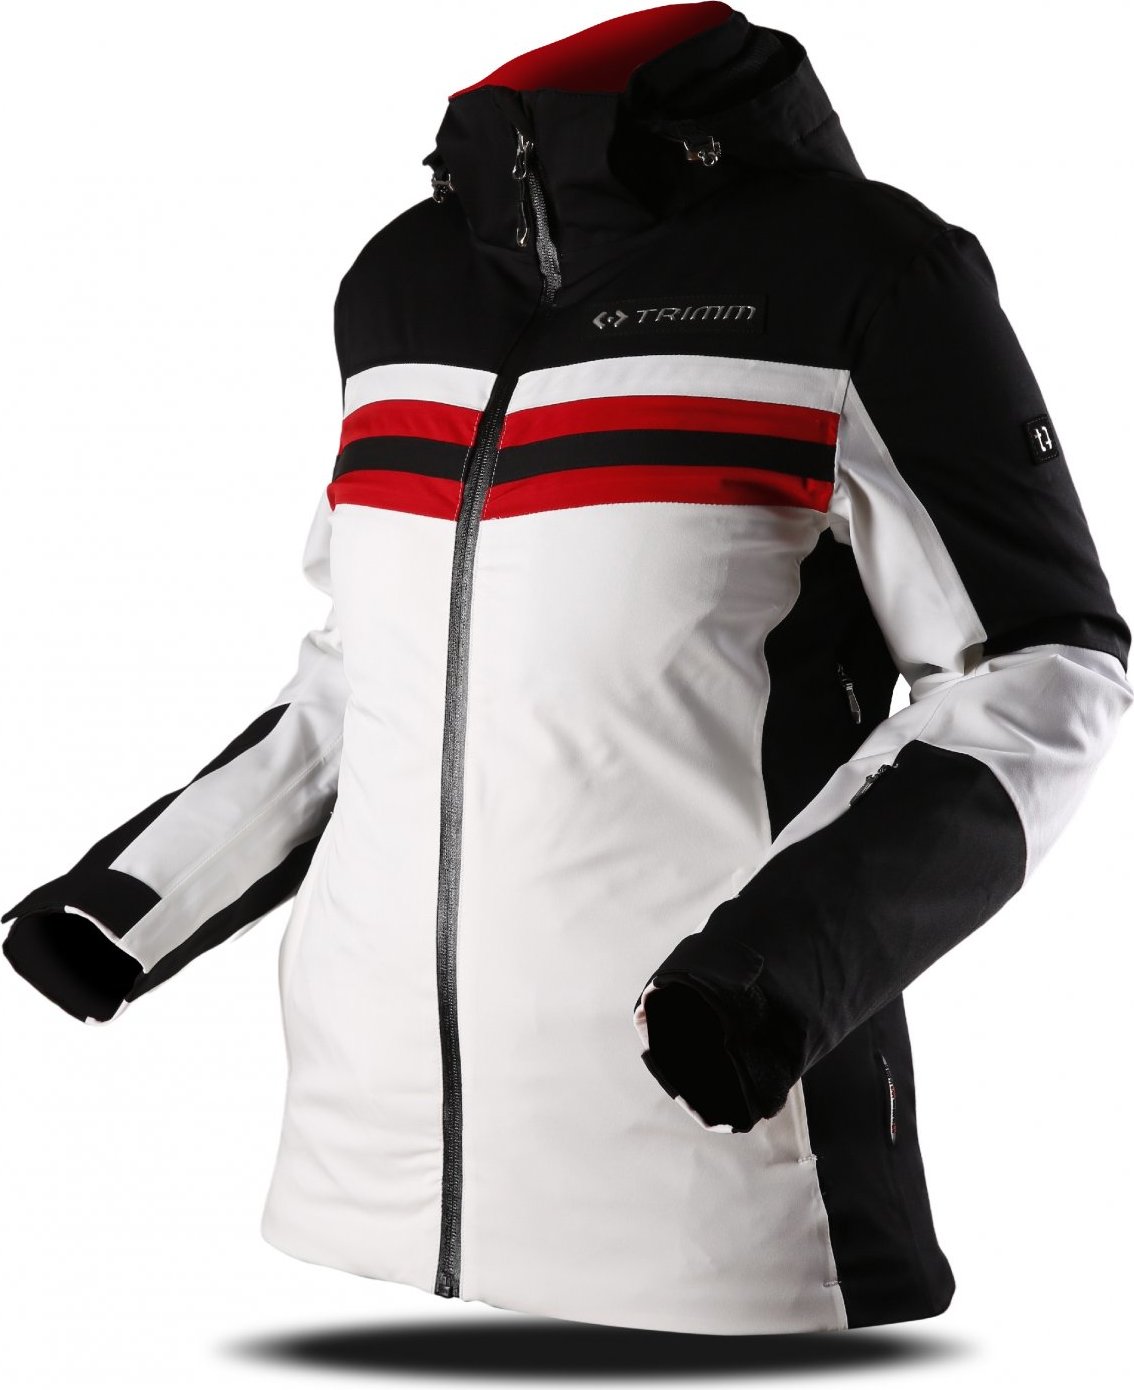 Dámská lyžařská bunda TRIMM Ilusion bílá Velikost: S, Barva: white/red/black